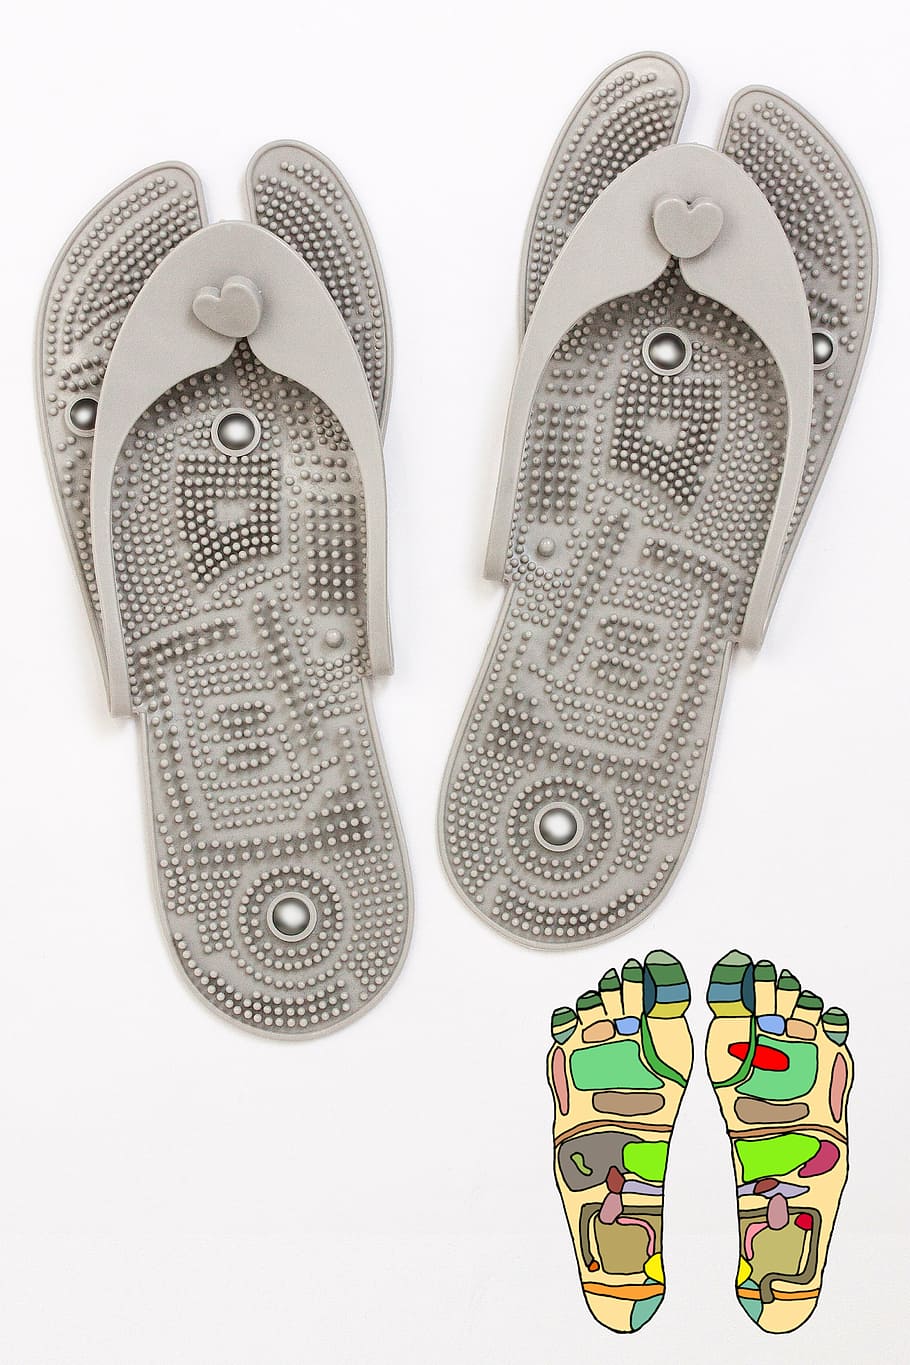 pair of gray flip-flops, flip flops, shoes, reflex zone massage, HD wallpaper